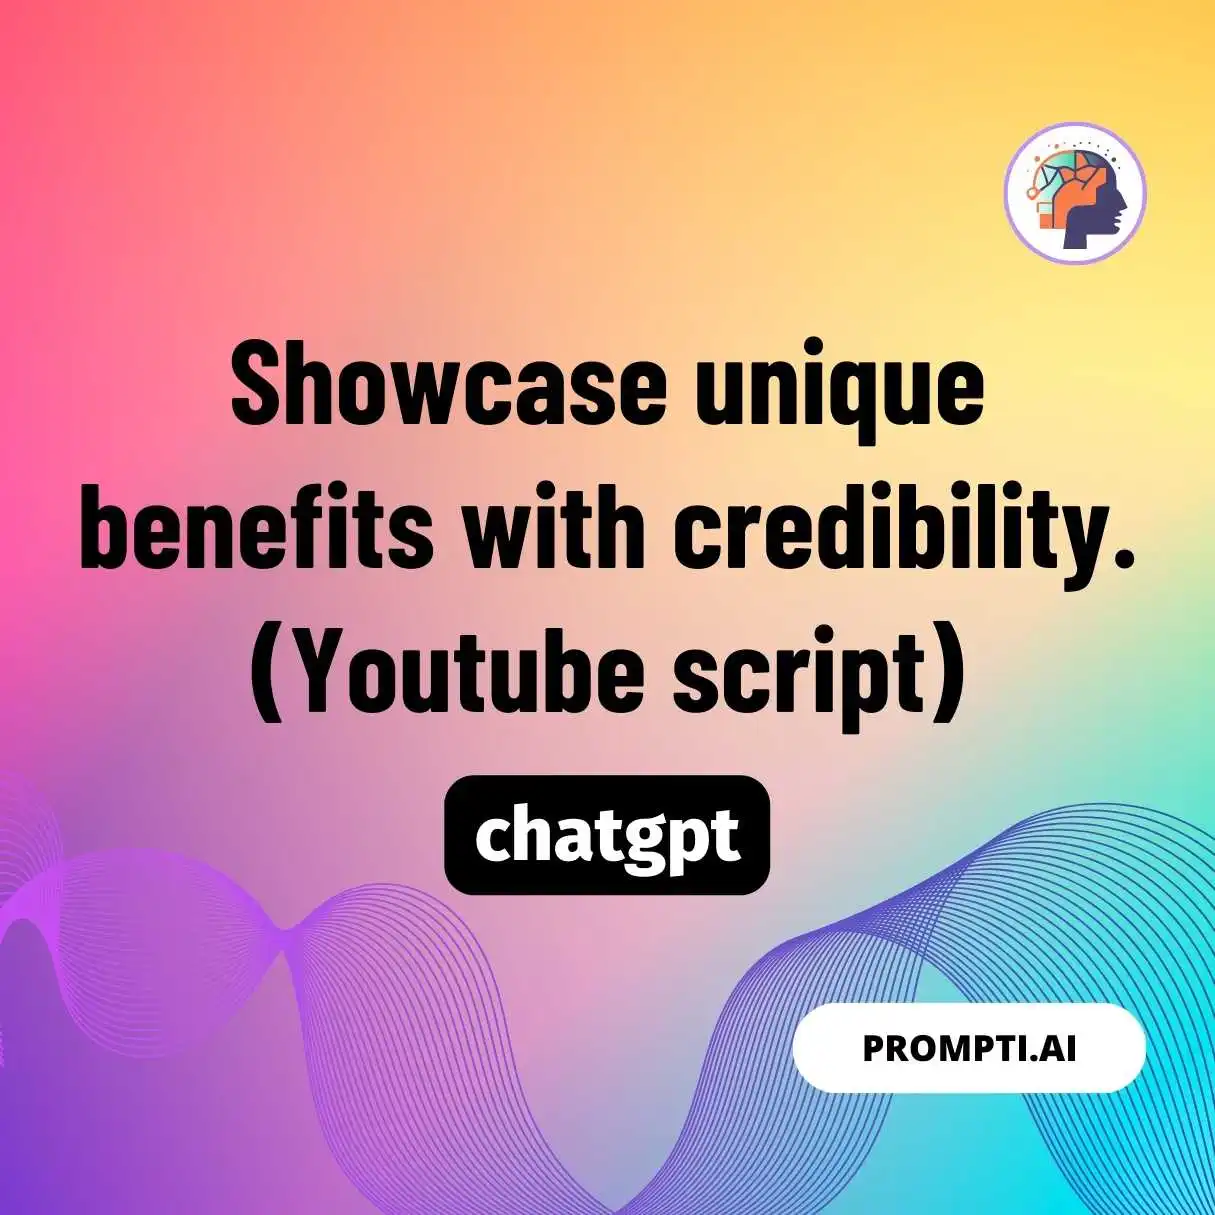 Showcase unique benefits with credibility. (Youtube script)